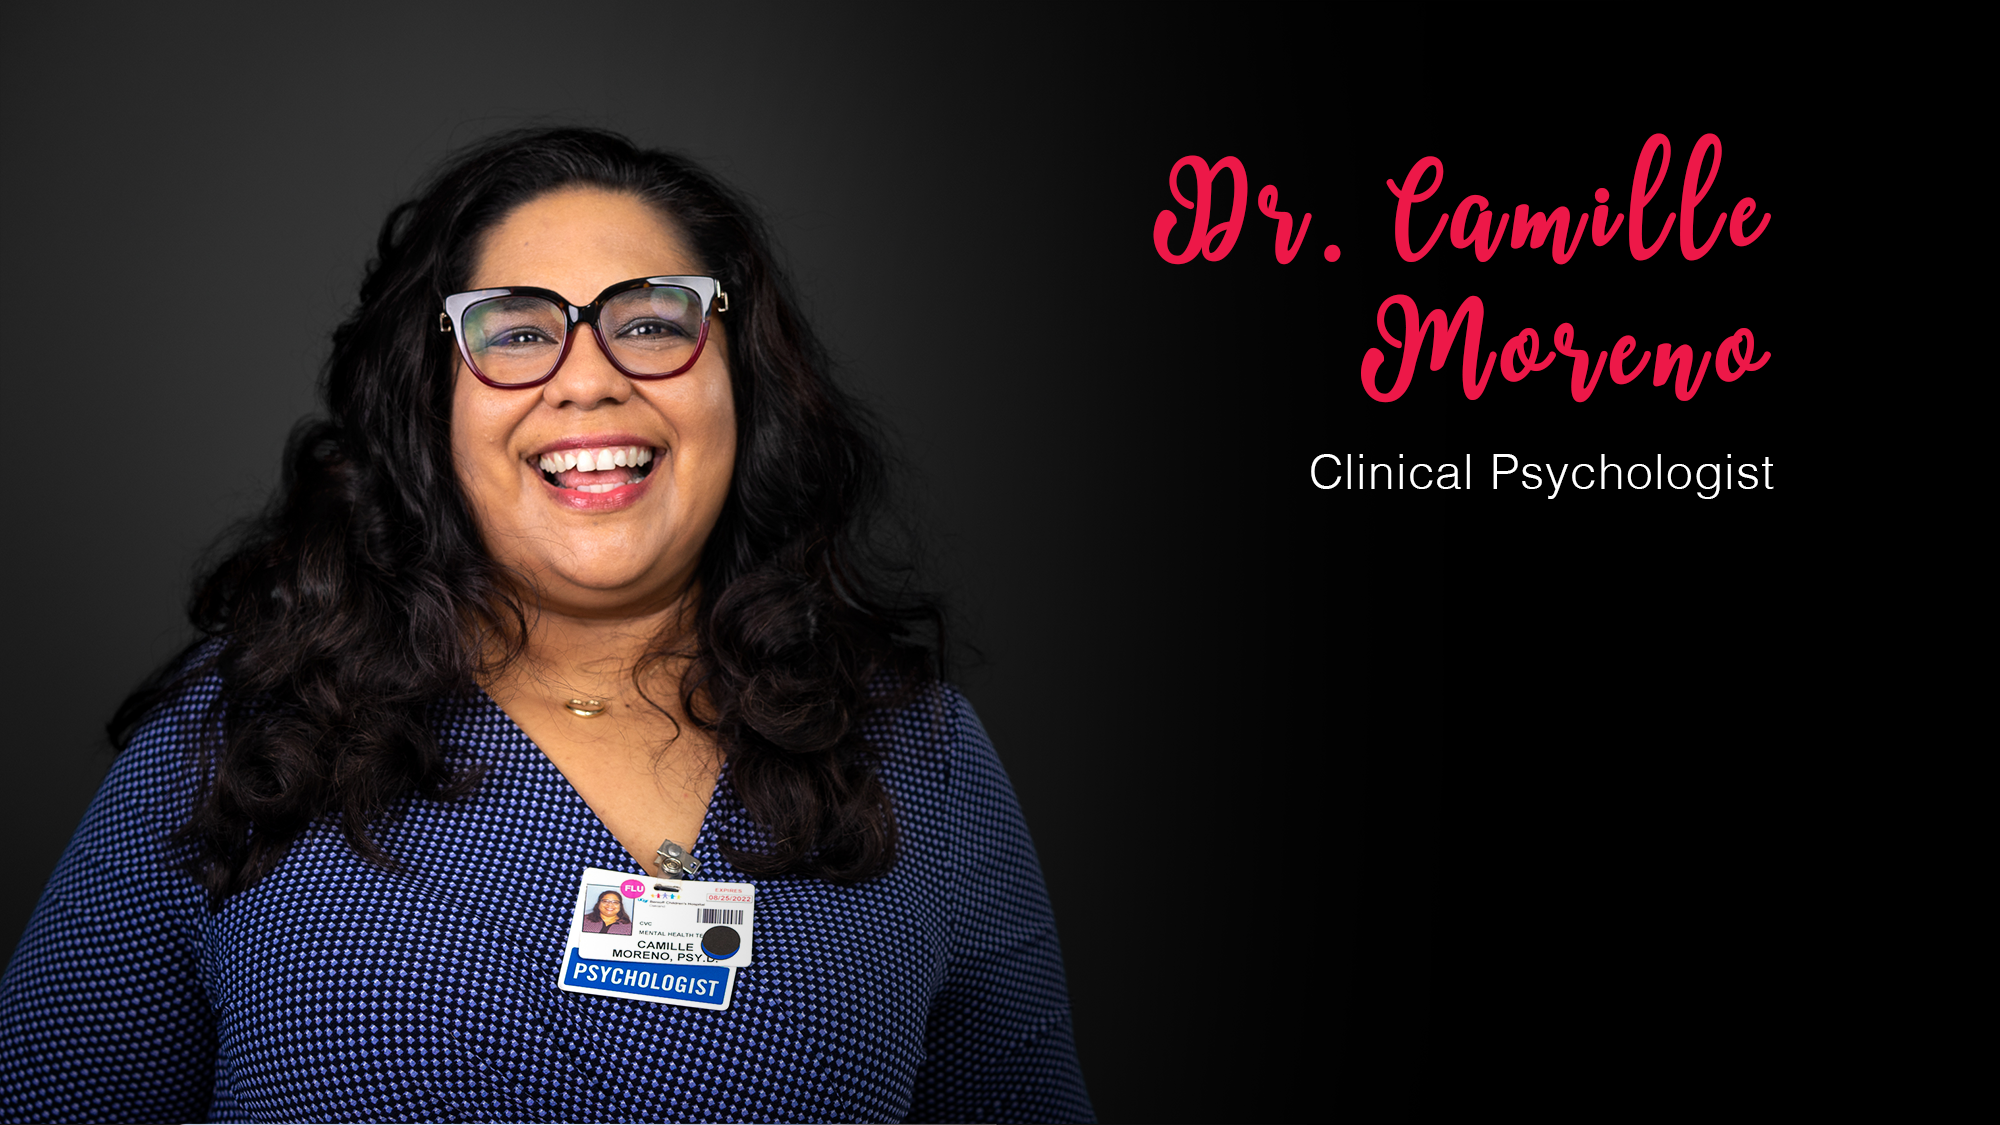 Dr. Camille Moreno